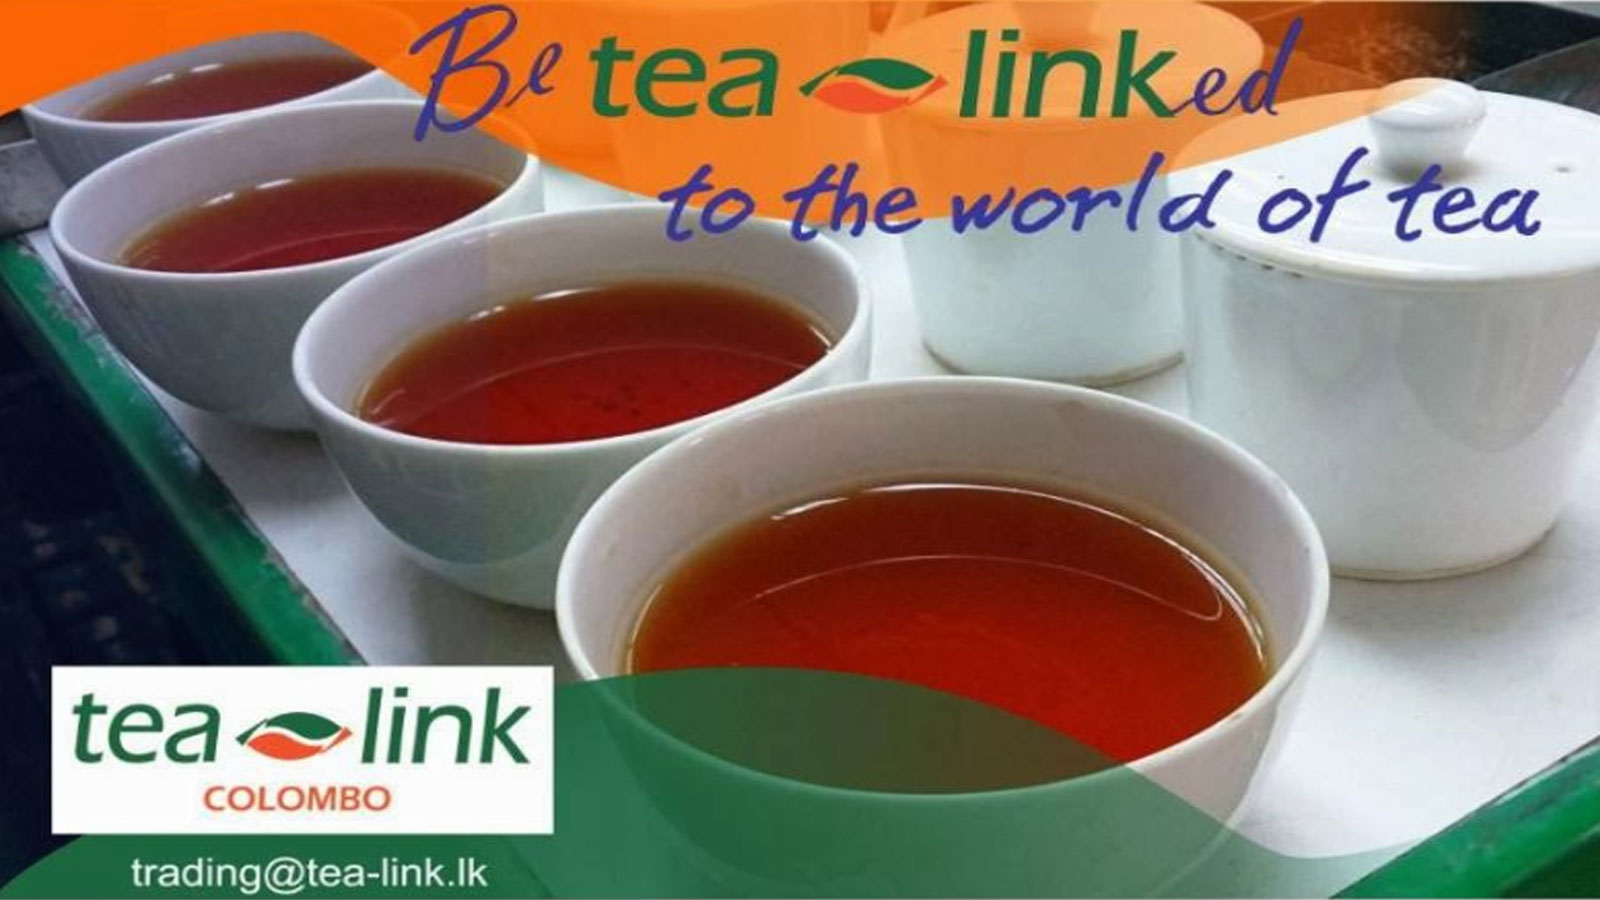 TEA-LINK COLOMBO PVT LTD